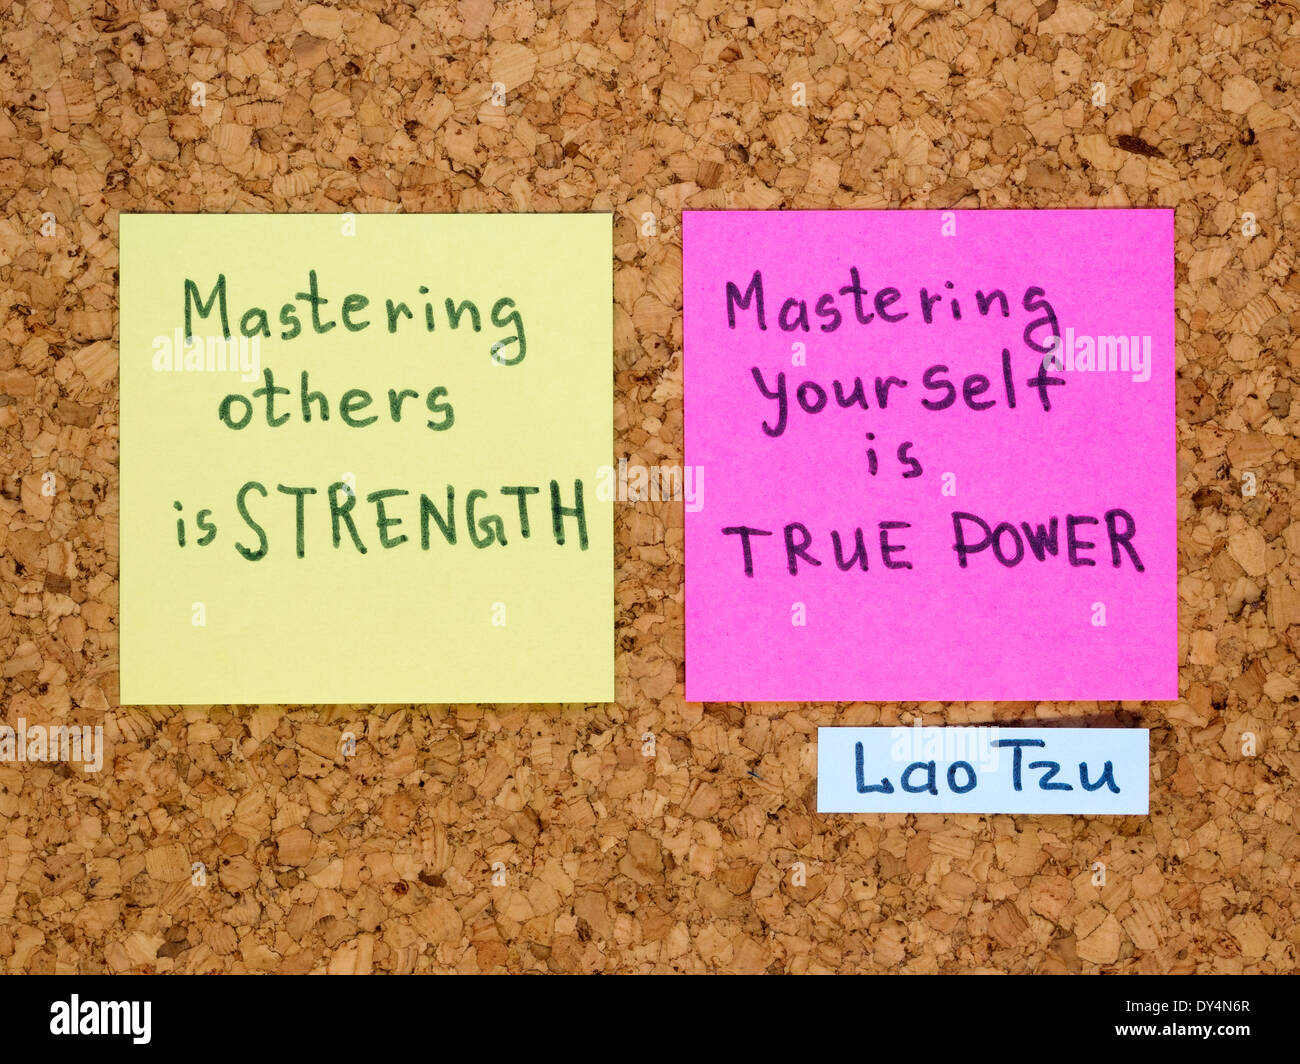 famous Lao Tzu quote interpretation with sticker notes on cork board Stock Photo